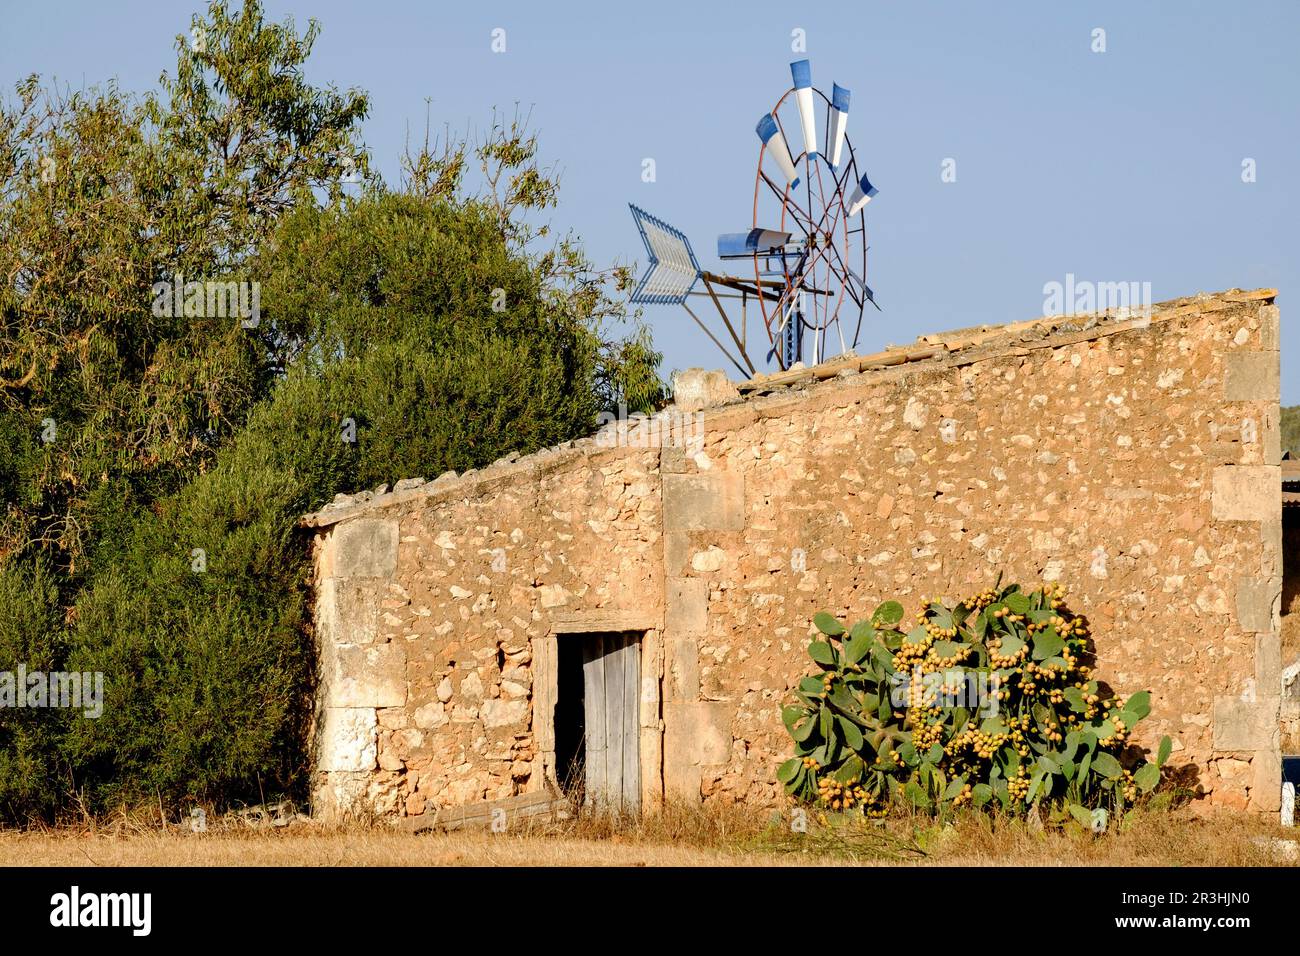 chumbera frente a una antigua casa de aperos, Ses Salines, Mallorca, balearic islands, spain, europe. Stock Photo